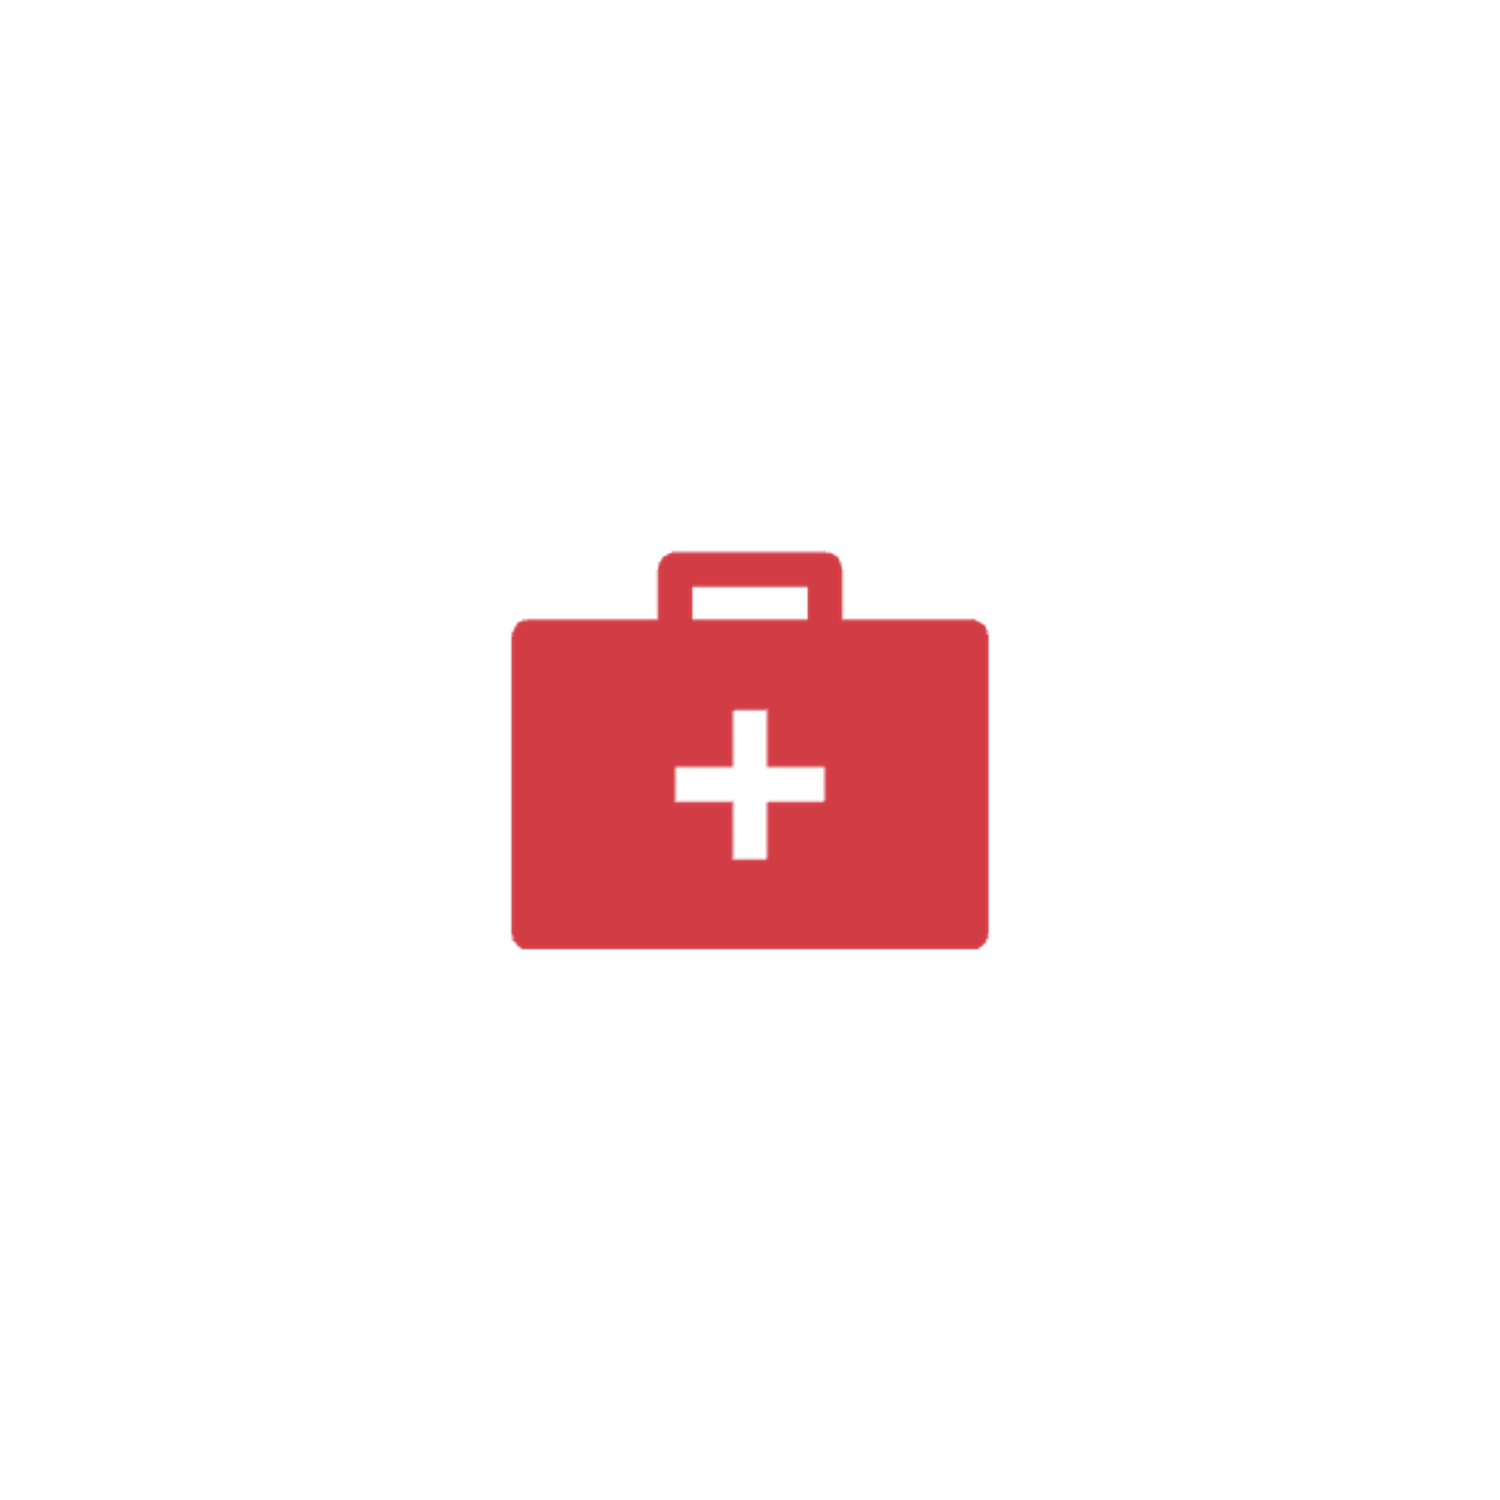 2x Notfalldose, SOS Notfalldose mit Rettungsaufkleber und  Informationsblatt, Patientendose, SOS Dose mit kostenloser  Notfalldokumentation : : Drogerie & Körperpflege